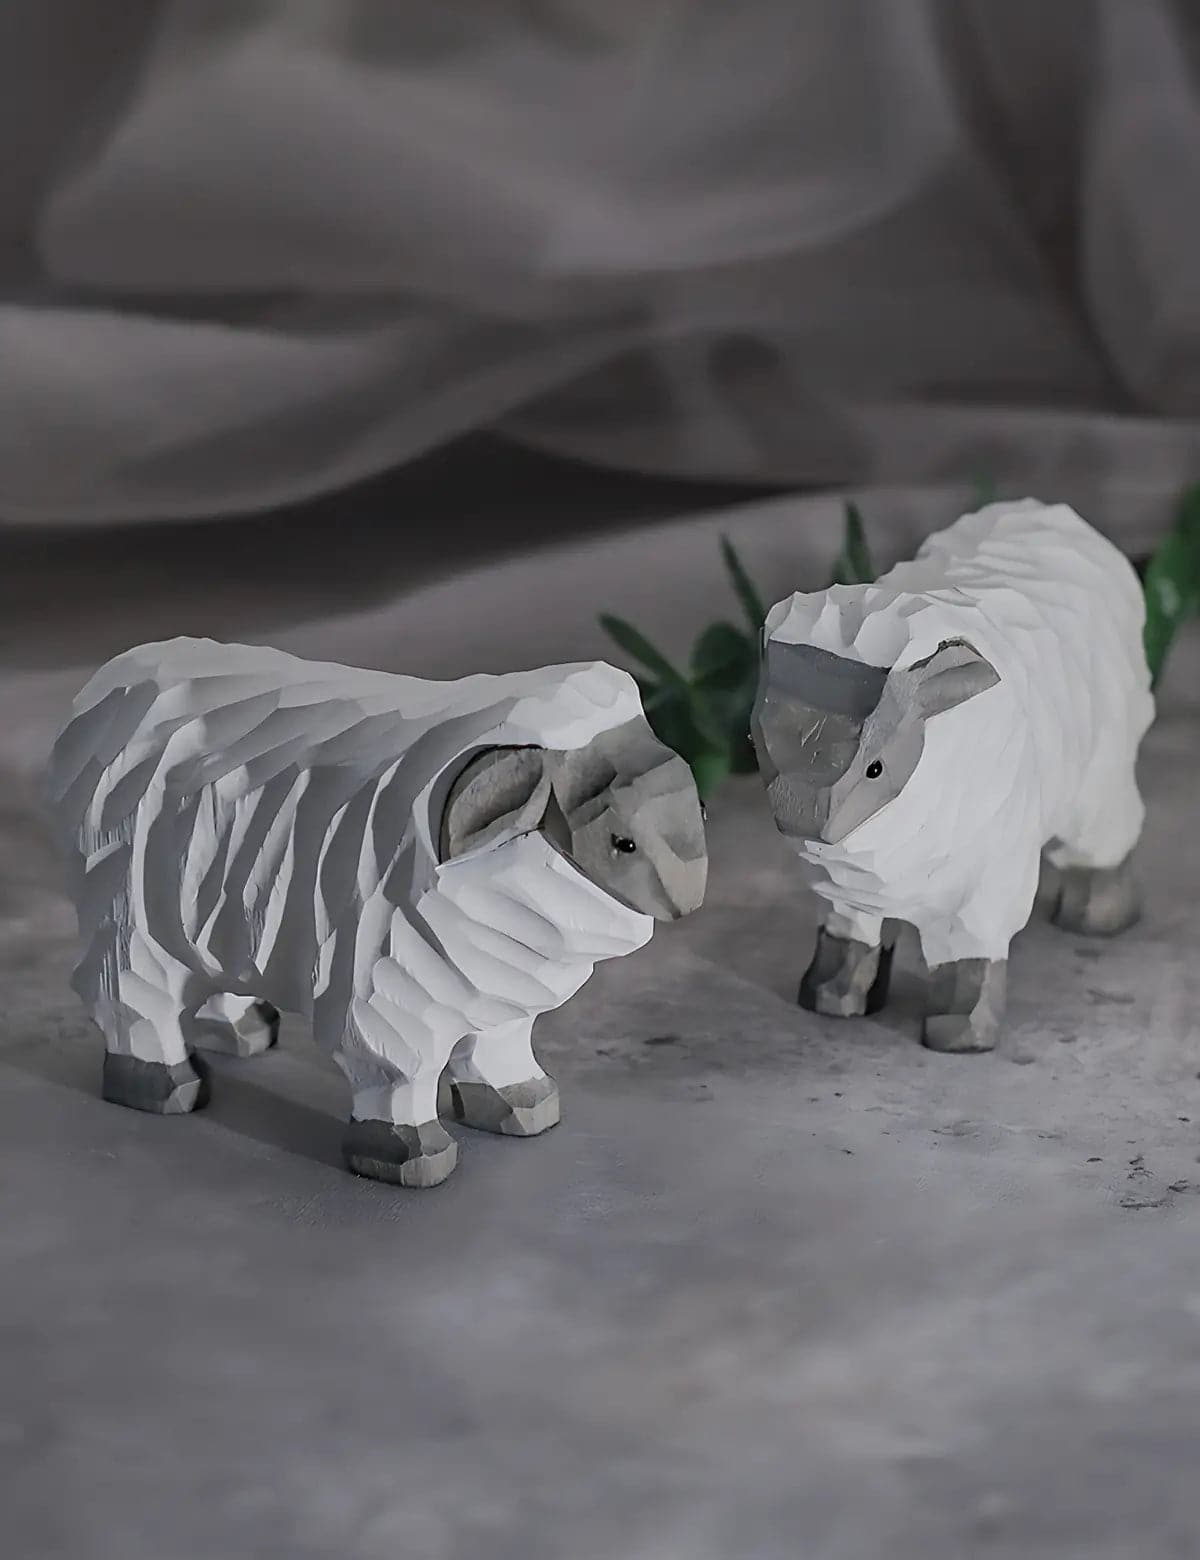 Artisanal-Sheep-Wood-Carving-Decor-02